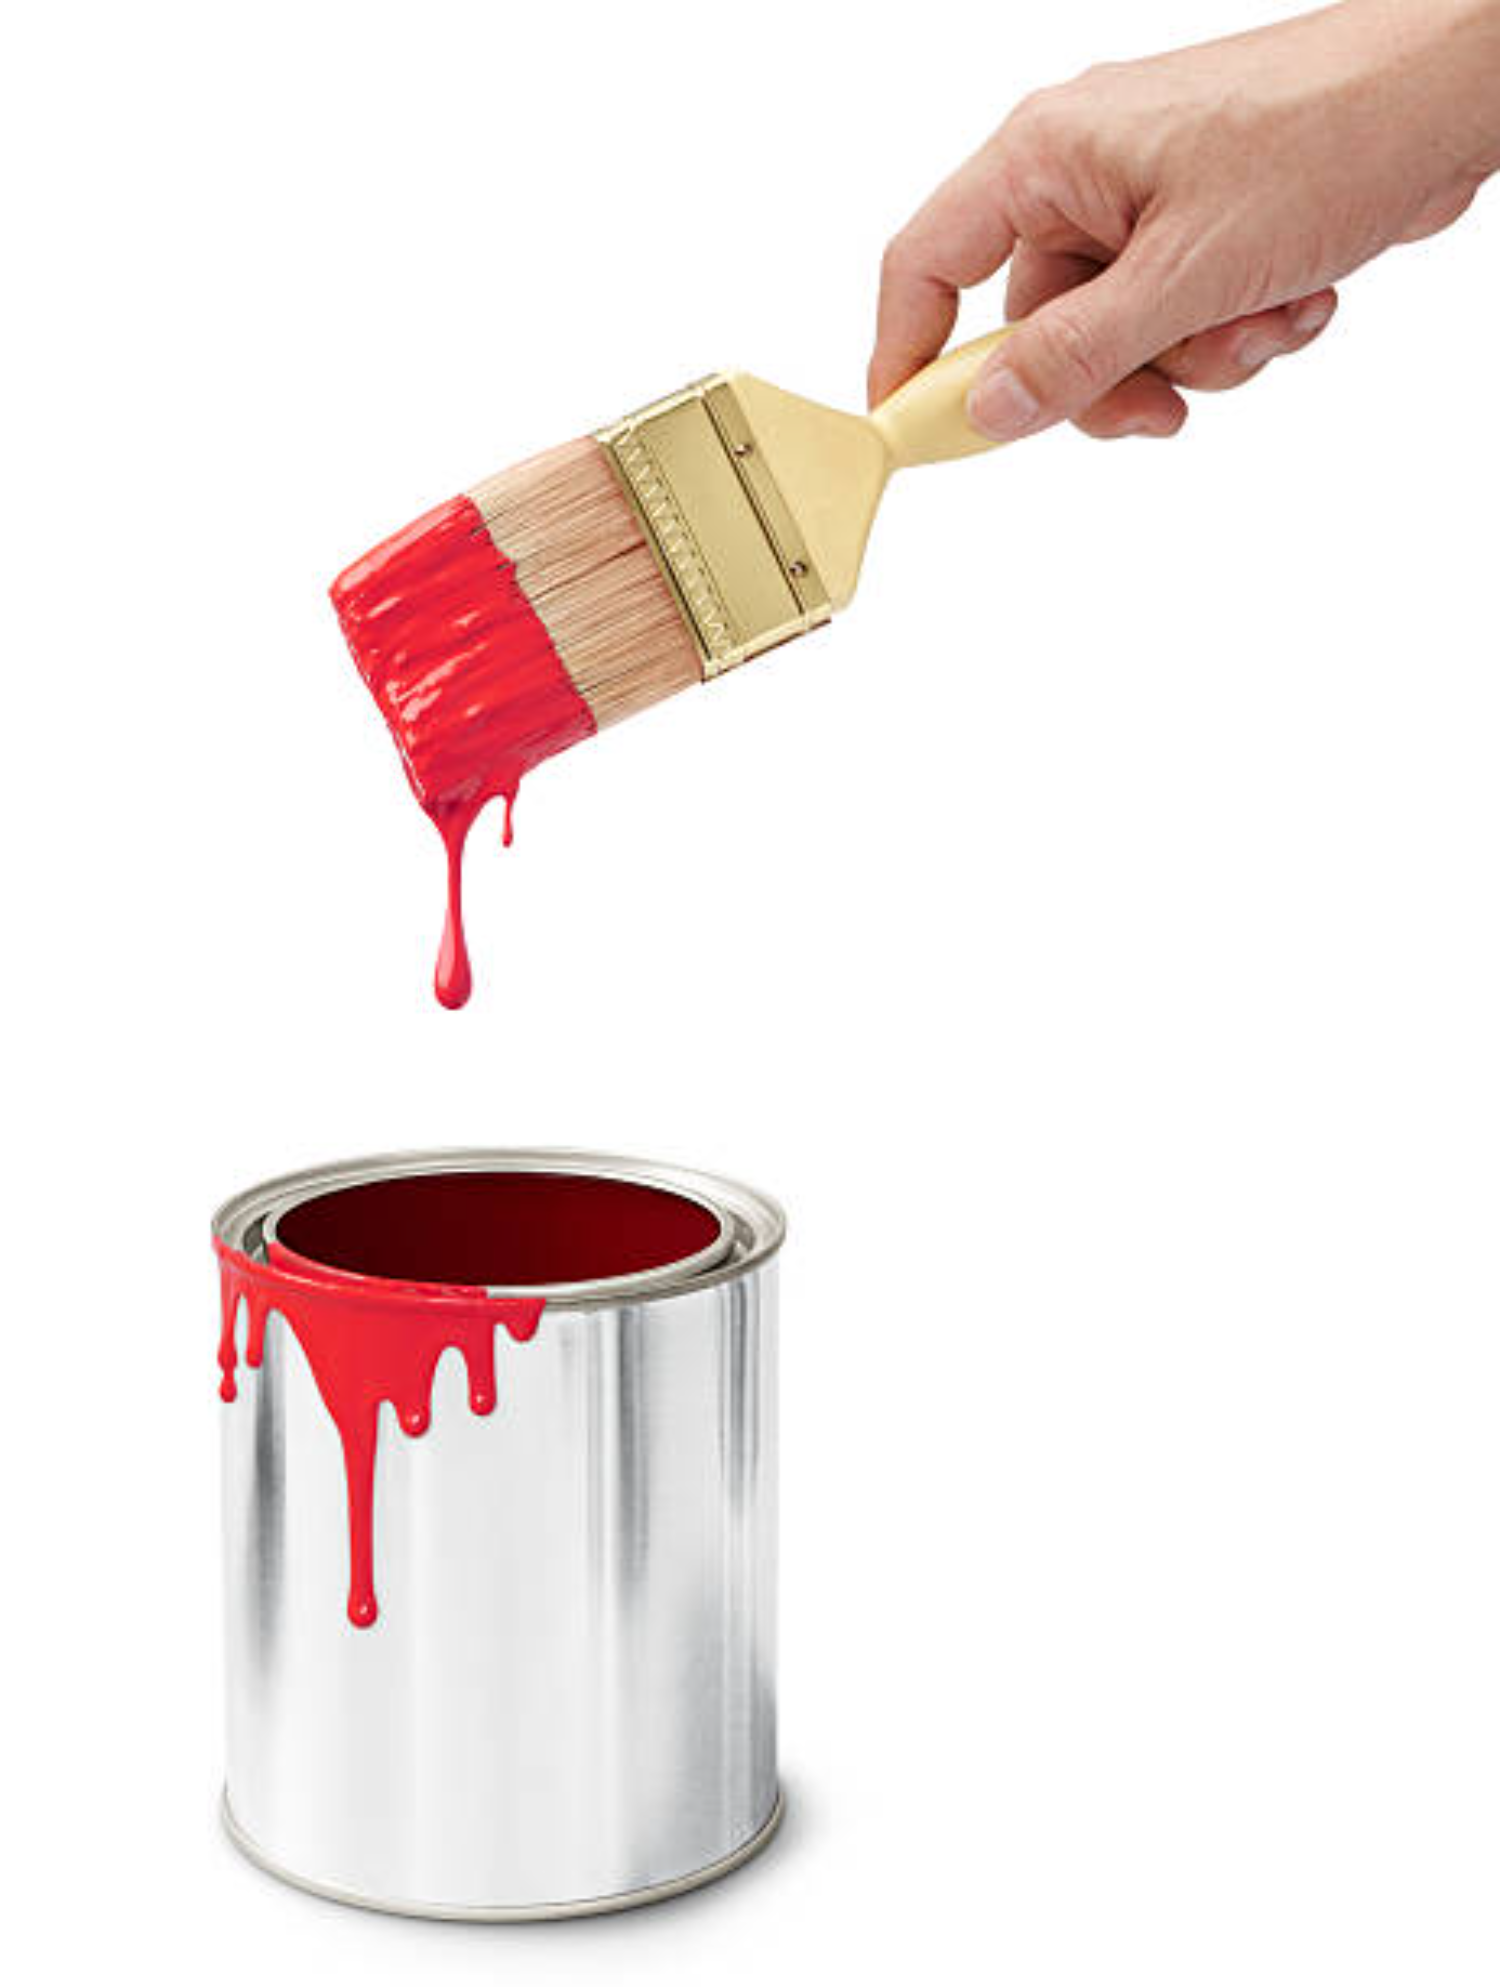 tap brush before painting furniture